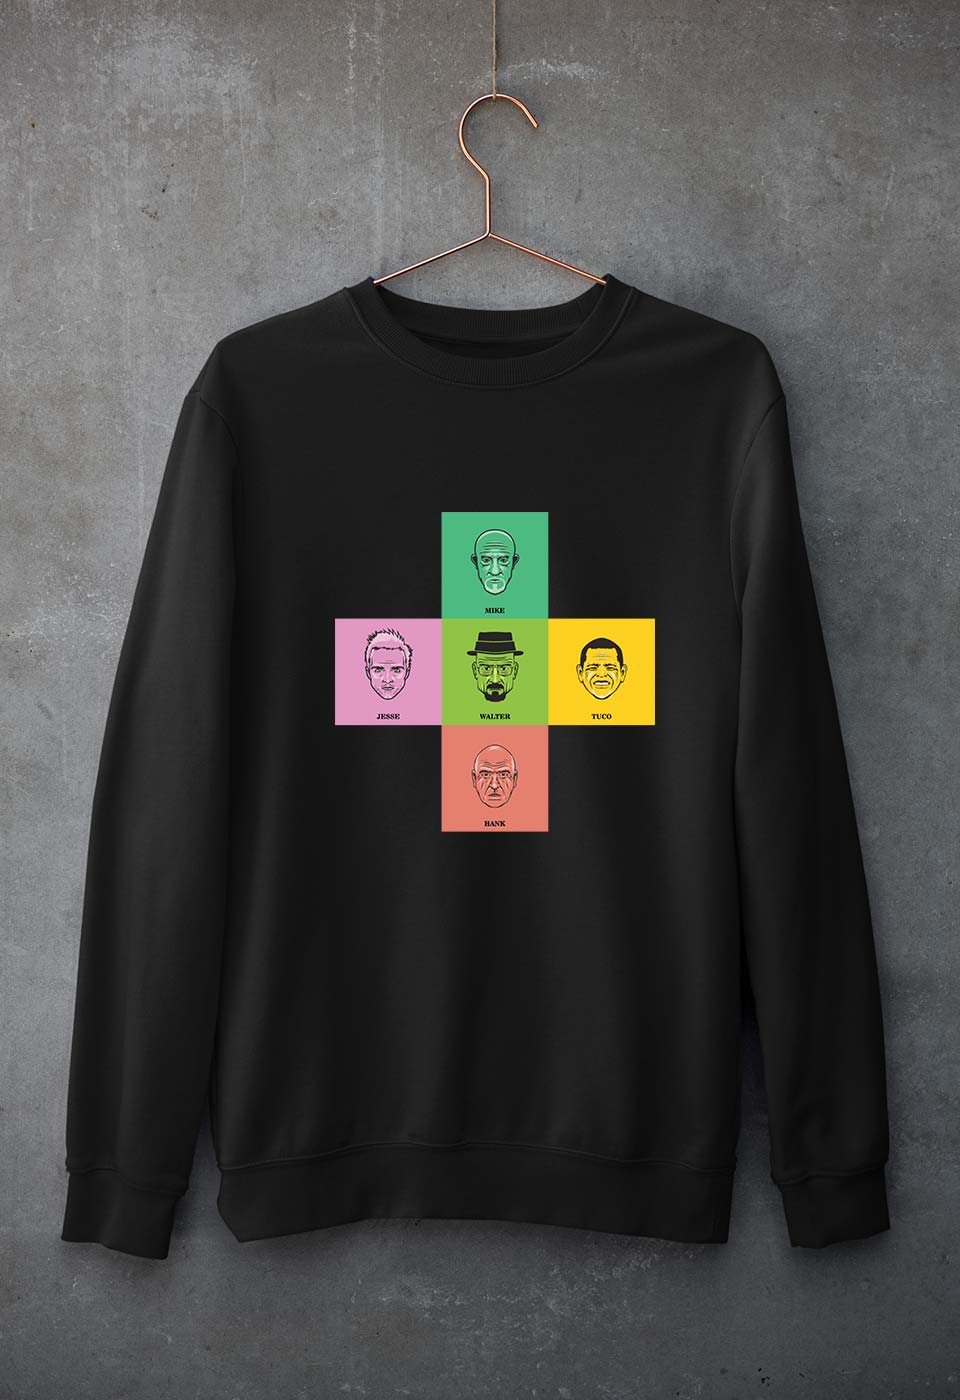 Breaking Bad Unisex Sweatshirt for Men/Women-S(40 Inches)-Black-Ektarfa.online